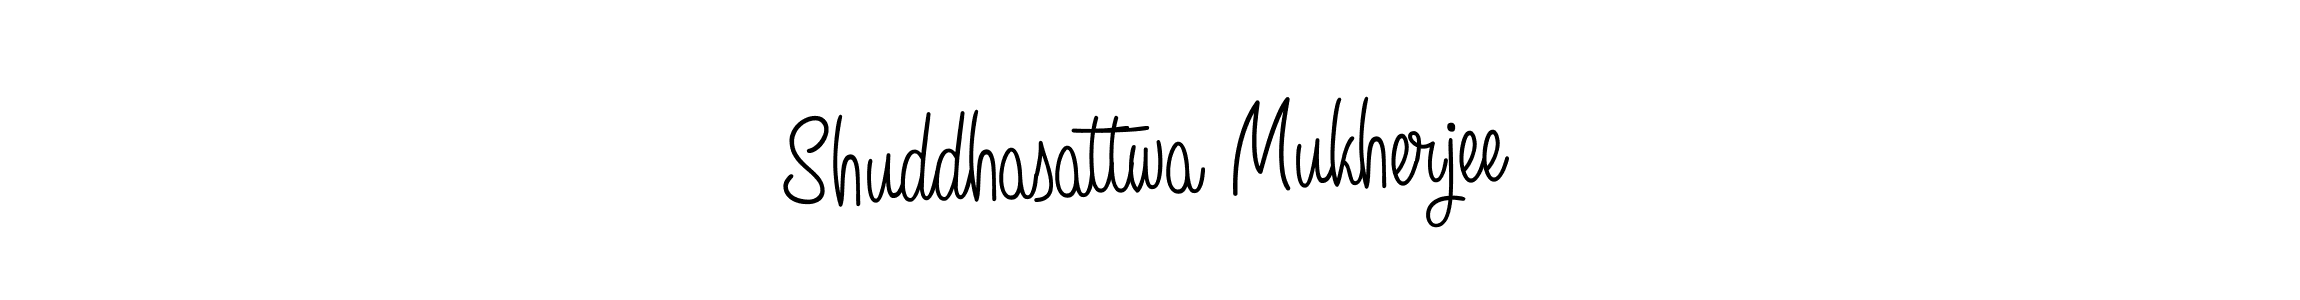 Best and Professional Signature Style for Shuddhasattwa Mukherjee. Angelique-Rose-font-FFP Best Signature Style Collection. Shuddhasattwa Mukherjee signature style 5 images and pictures png